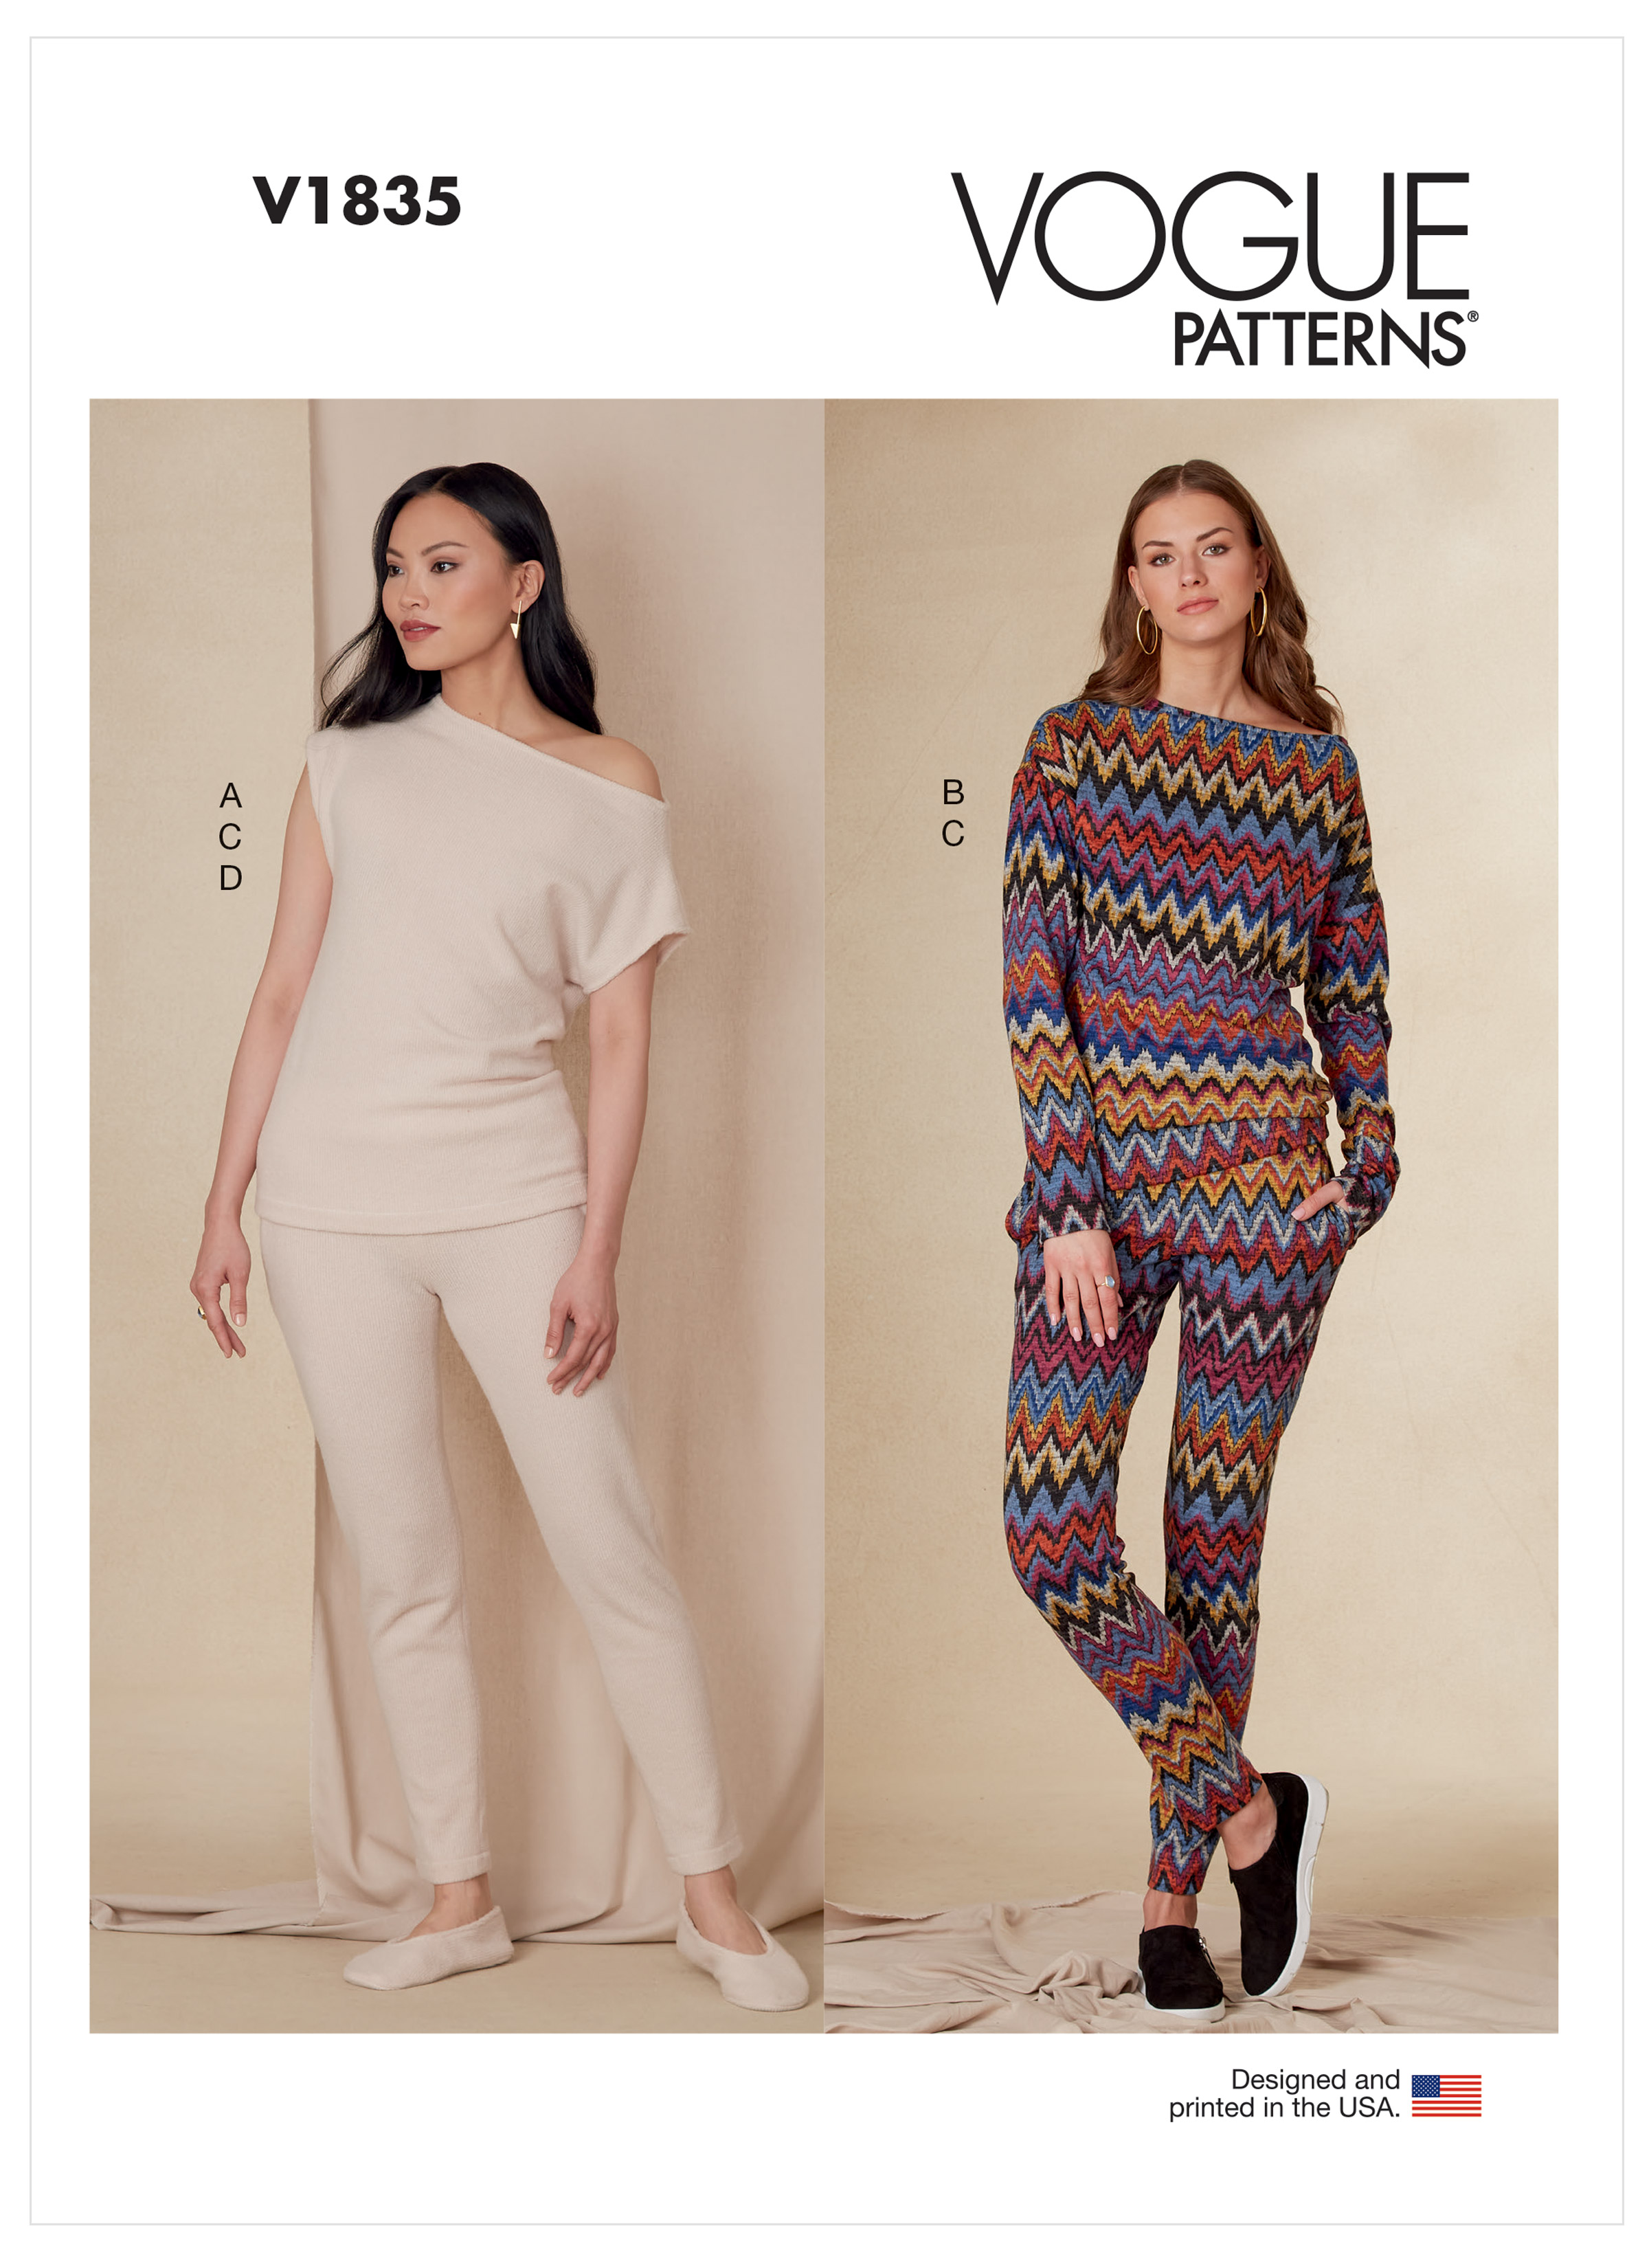 Vogue Patterns Hermes Birkin bag 7982 pattern review by mysonmark